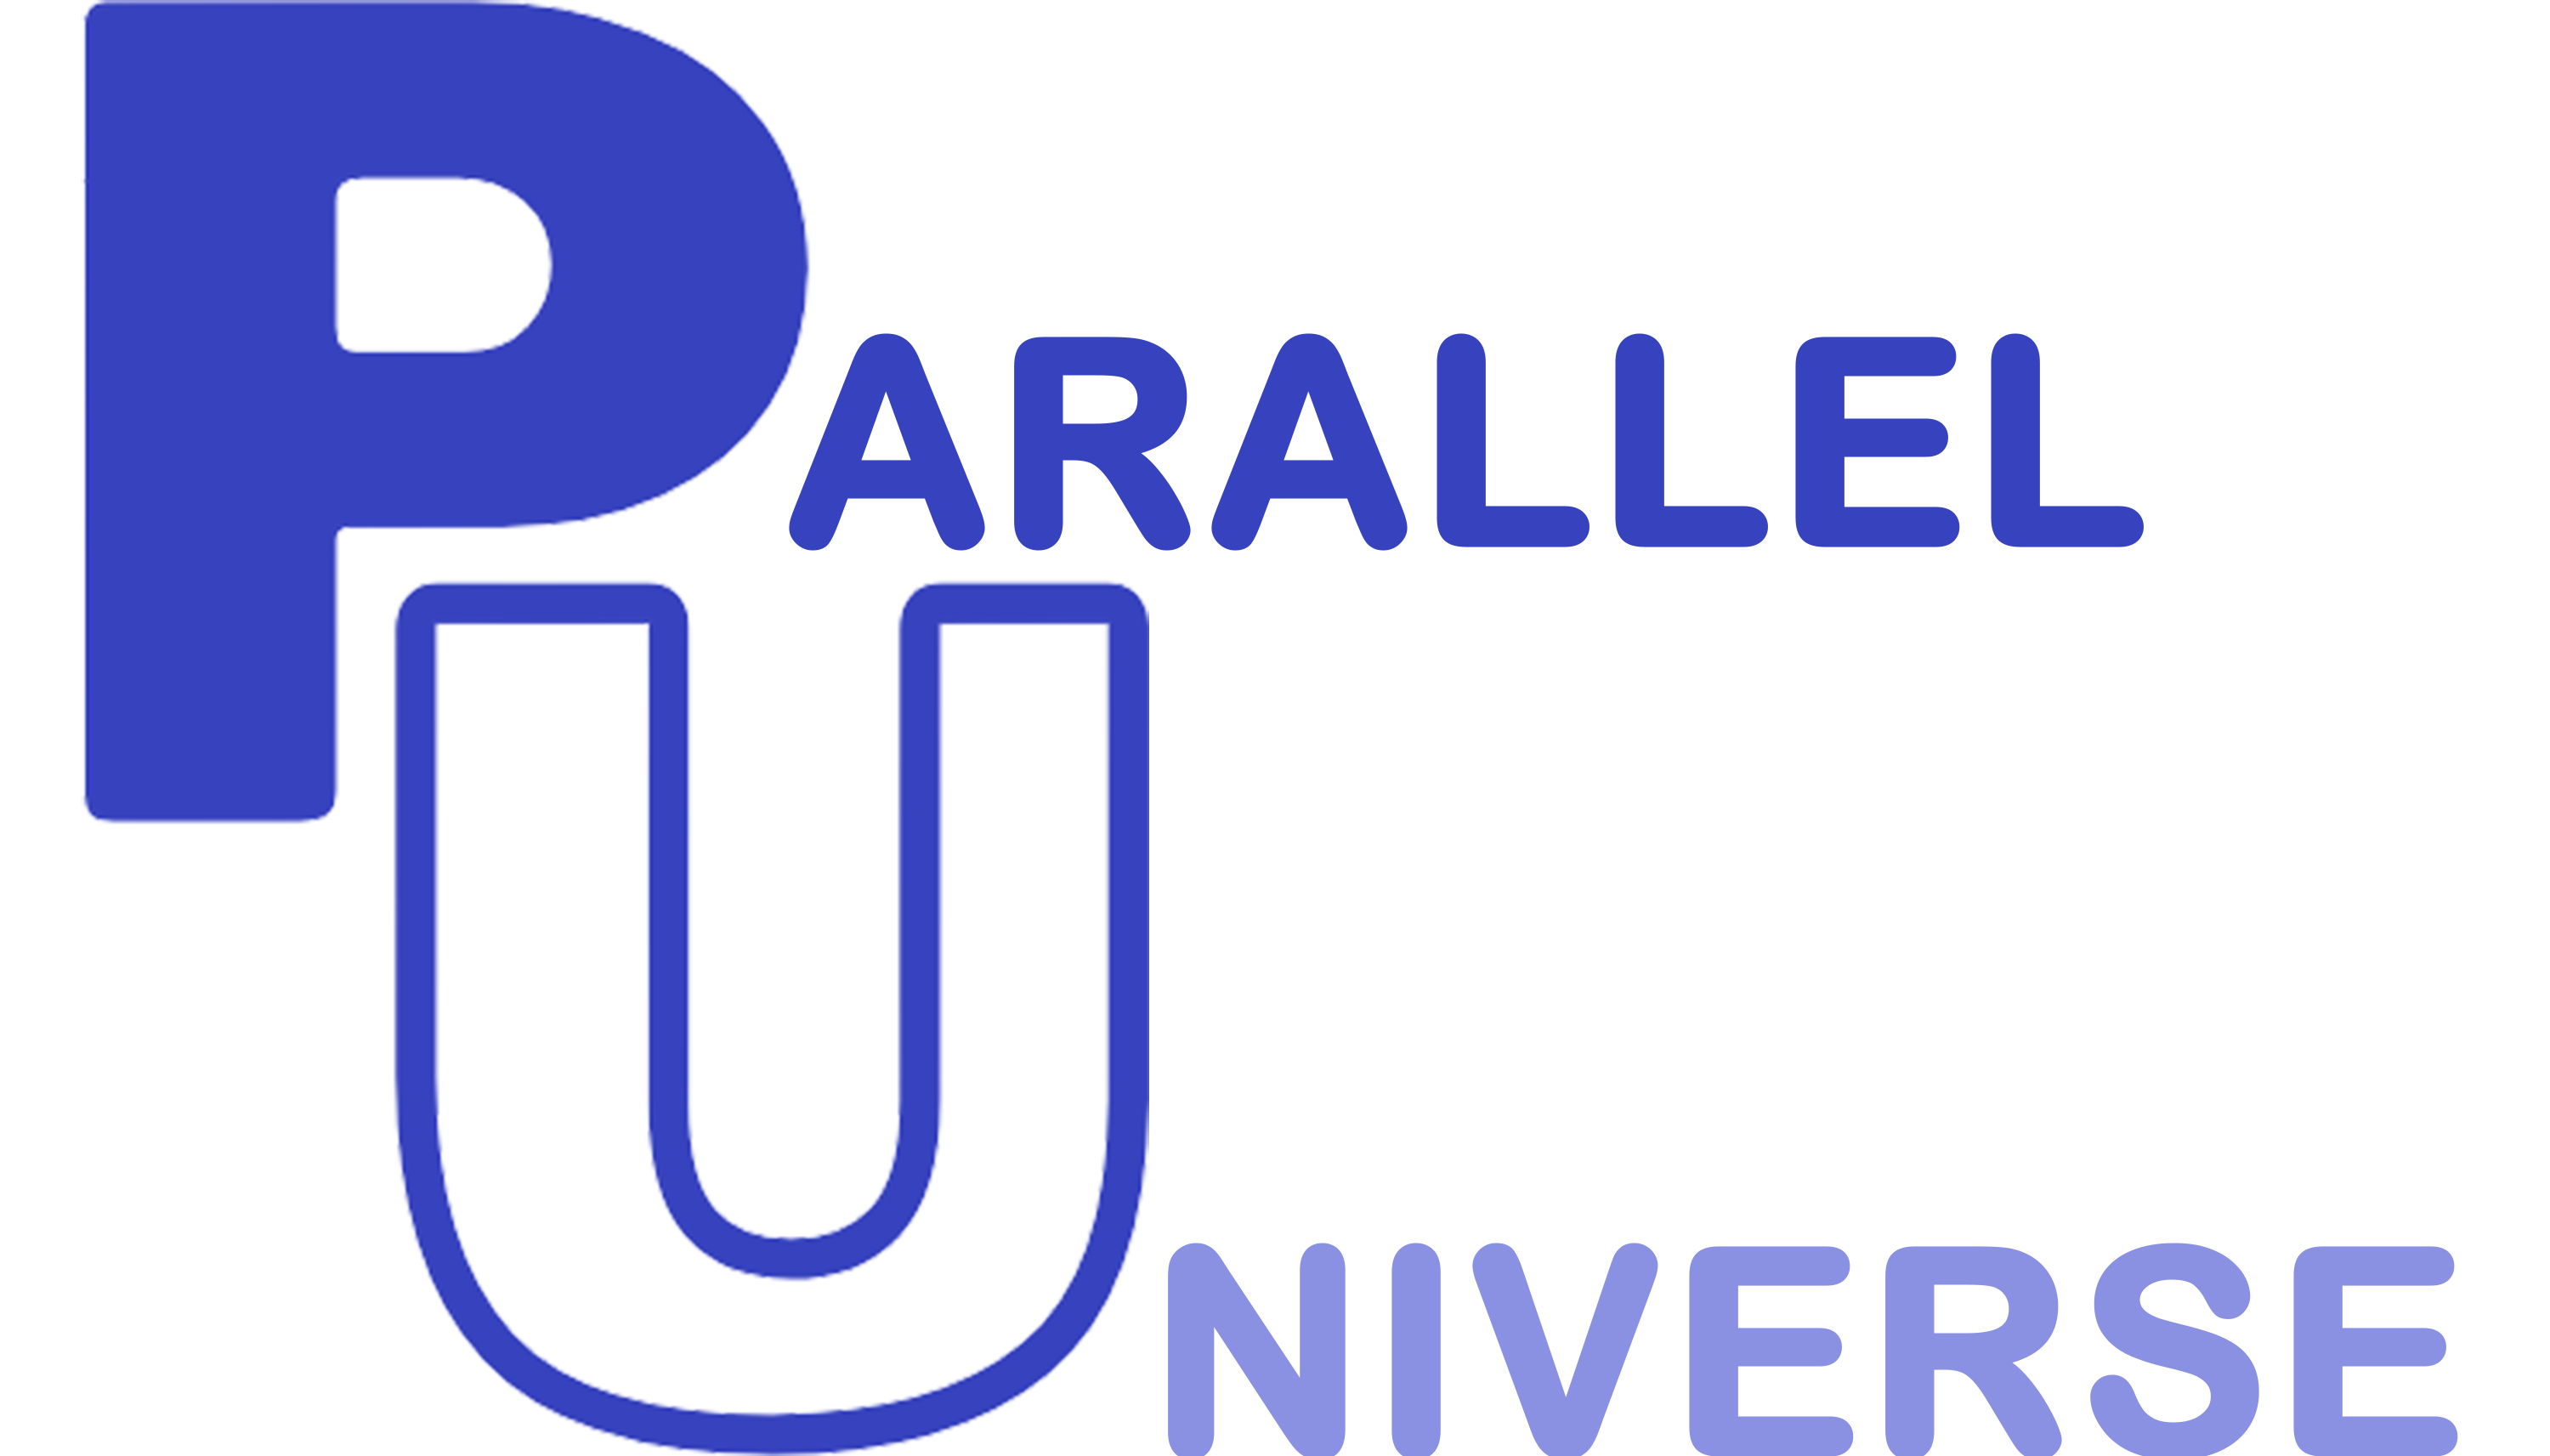 parallel-universe